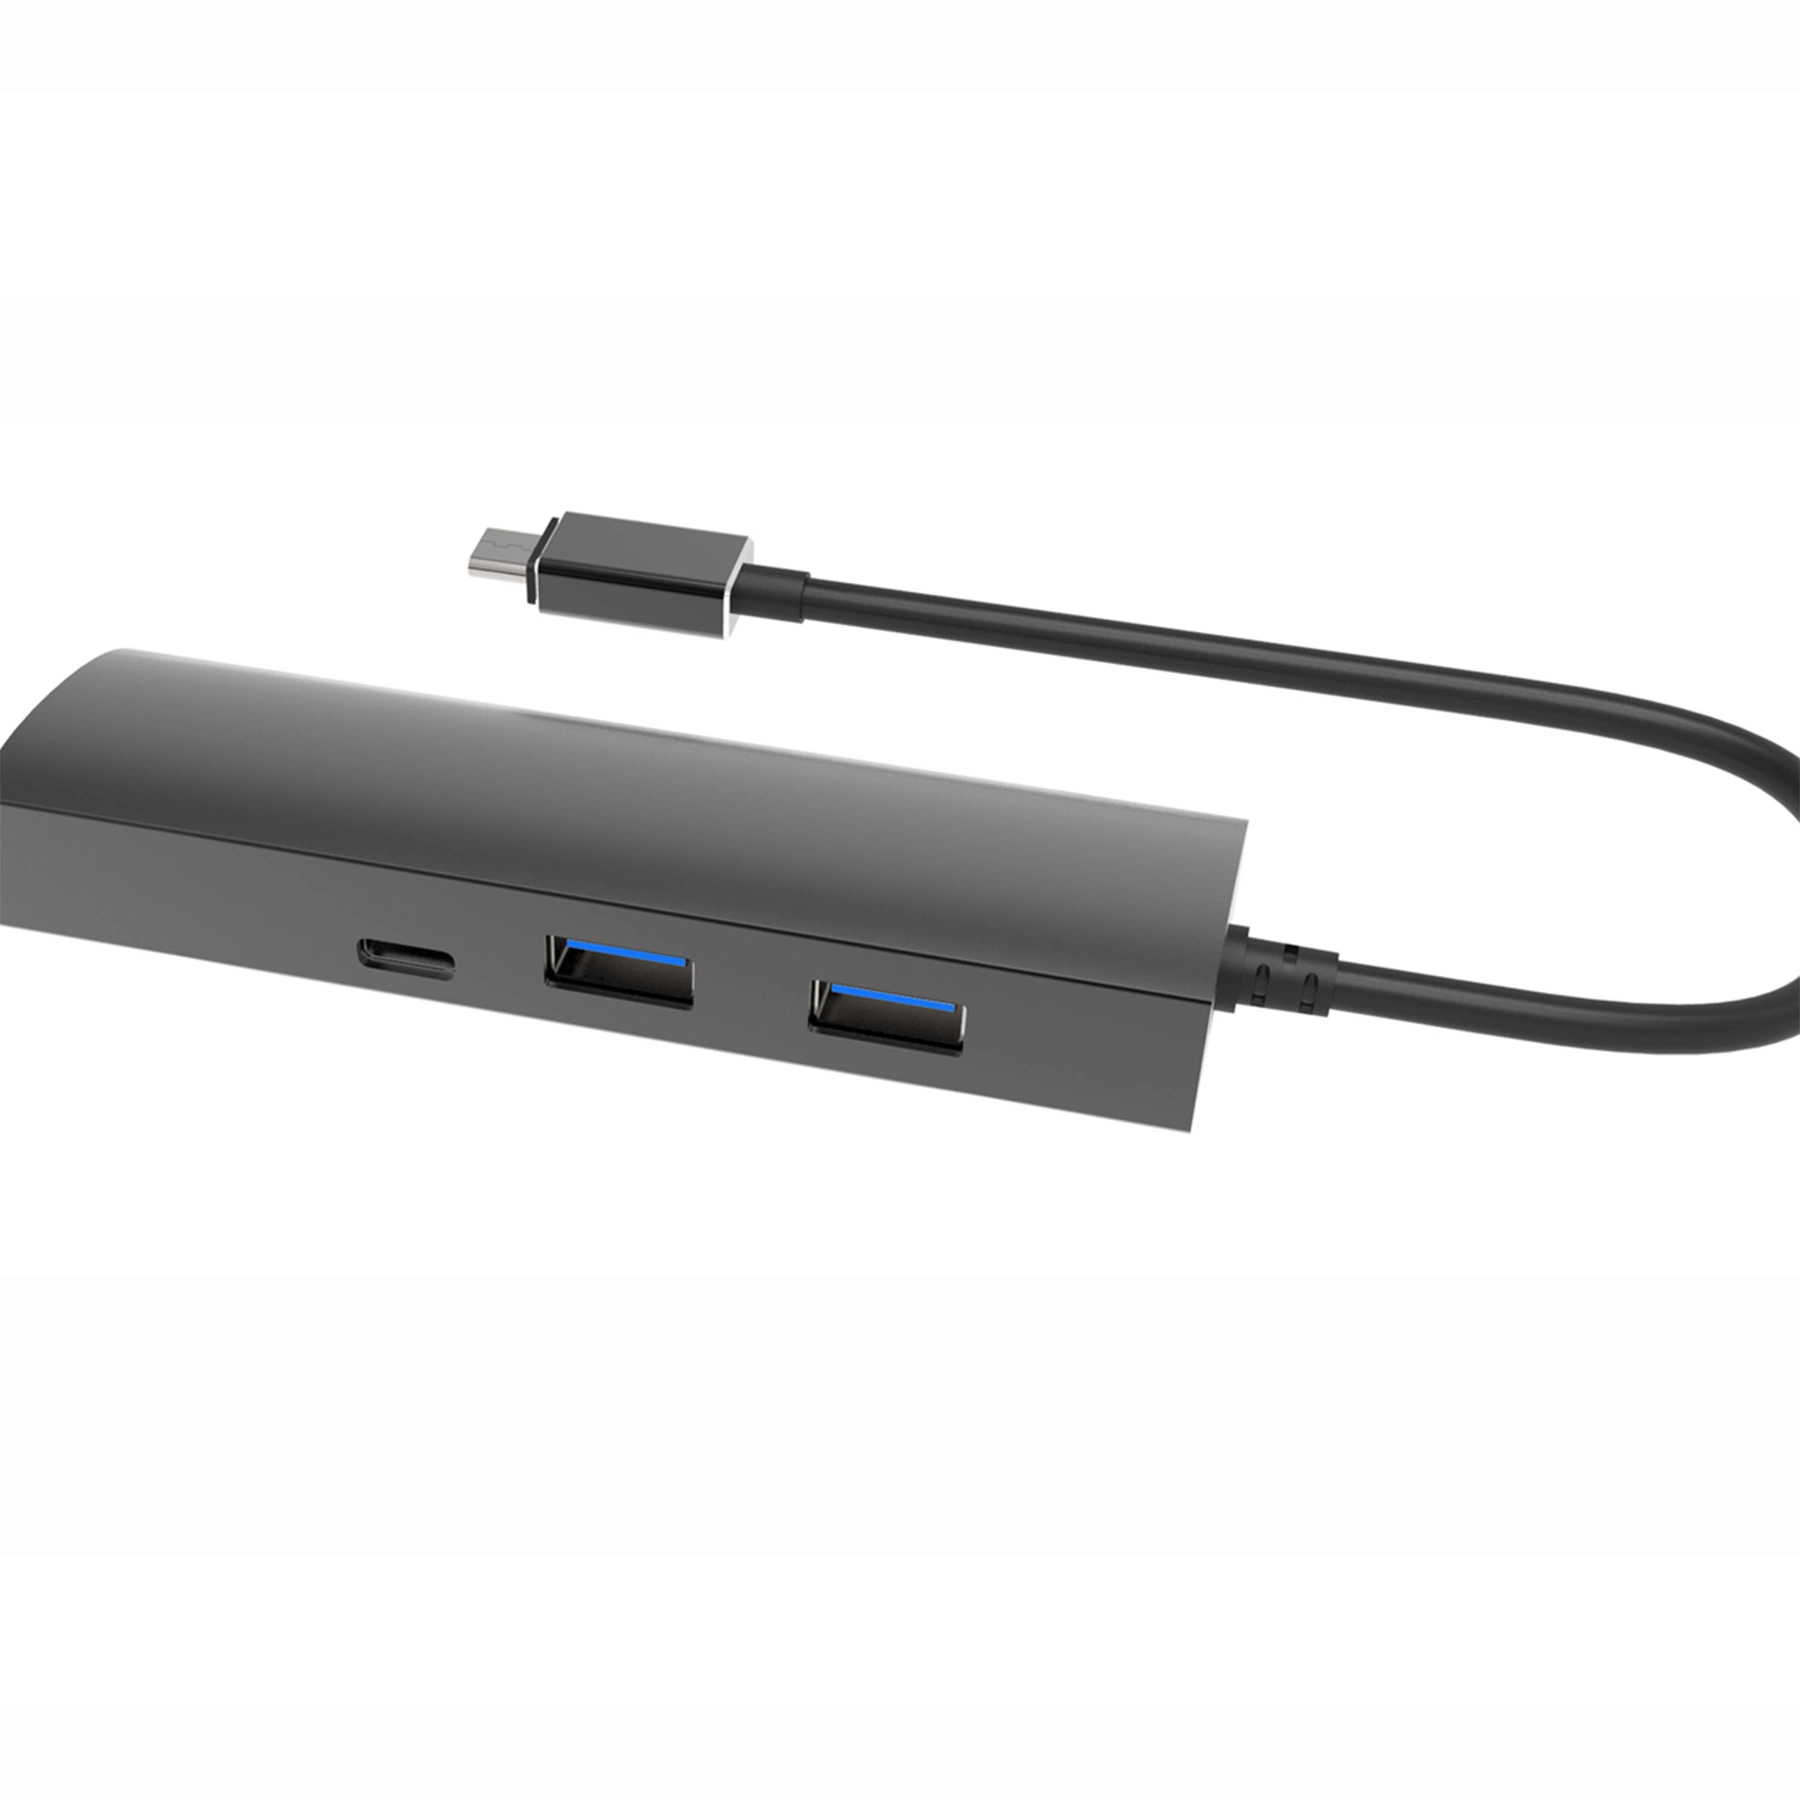 Superspeed USB-C порт Gigabit Ethernet 4 порт концентратора